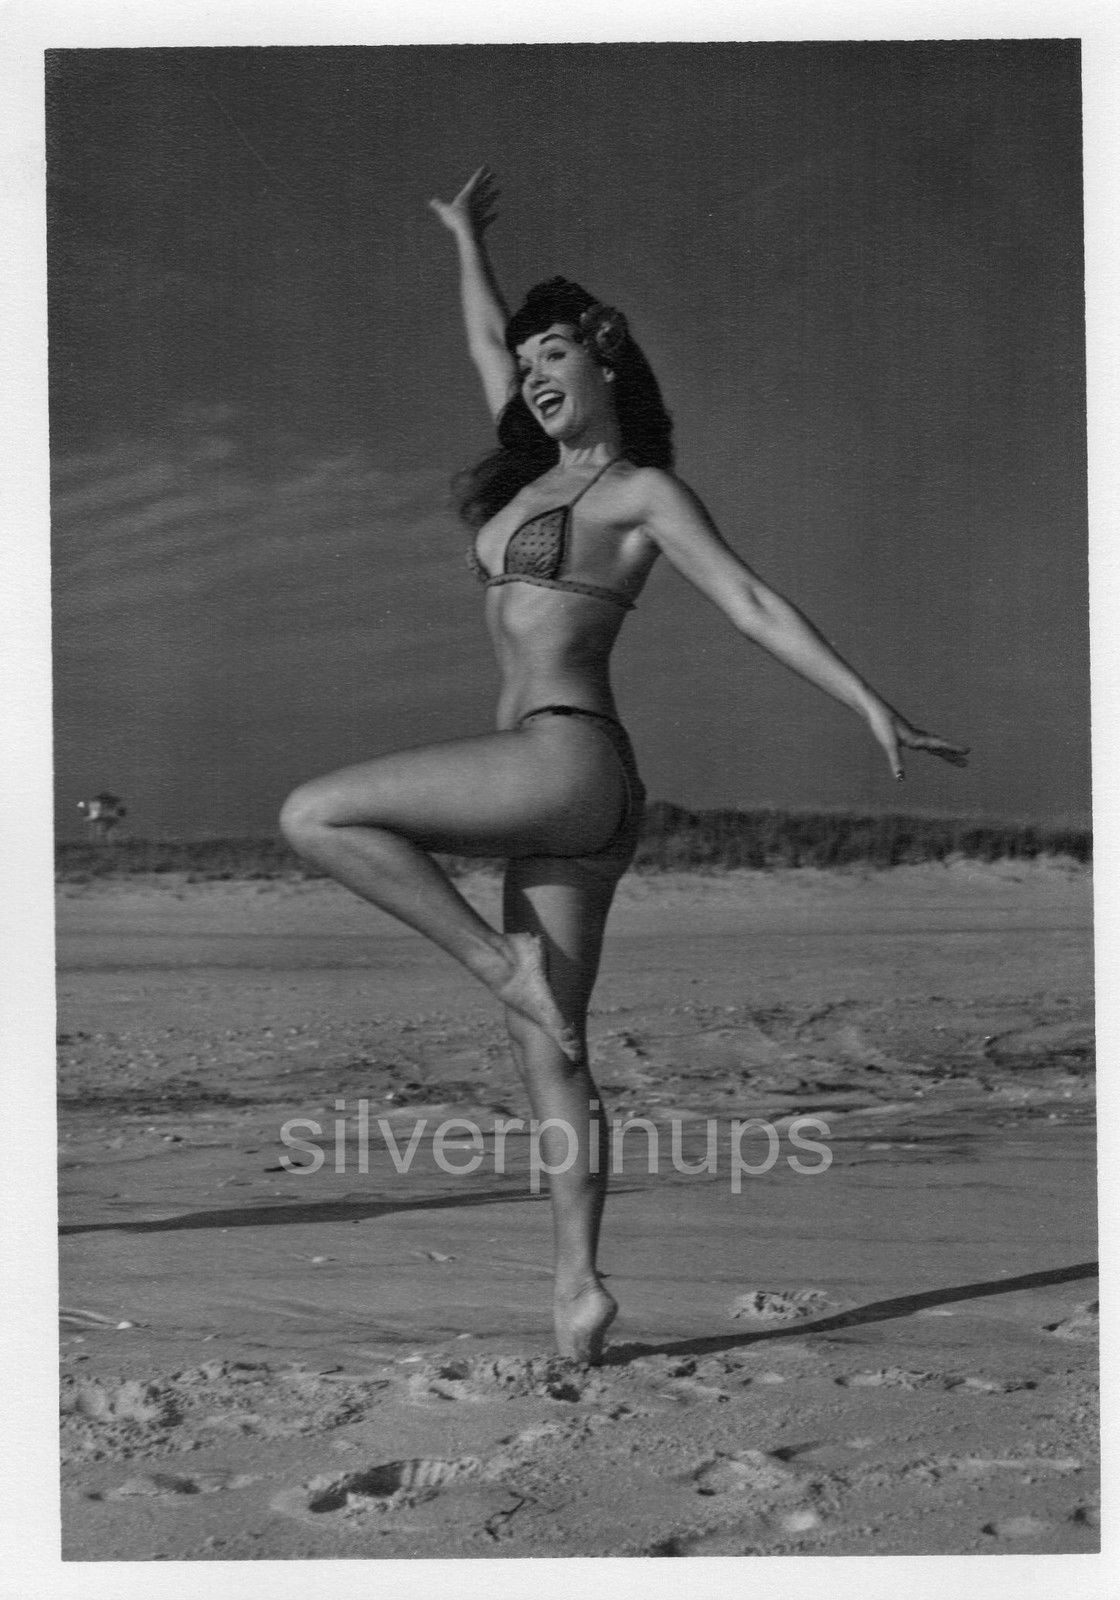 https://silverpinups.com/wp-content/uploads/2022/04/ORIGINAL-1950s-BETTIE-PAGE-Bikini-Pose..-DBW-Portrait-by-HENRY-FORREST.jpg